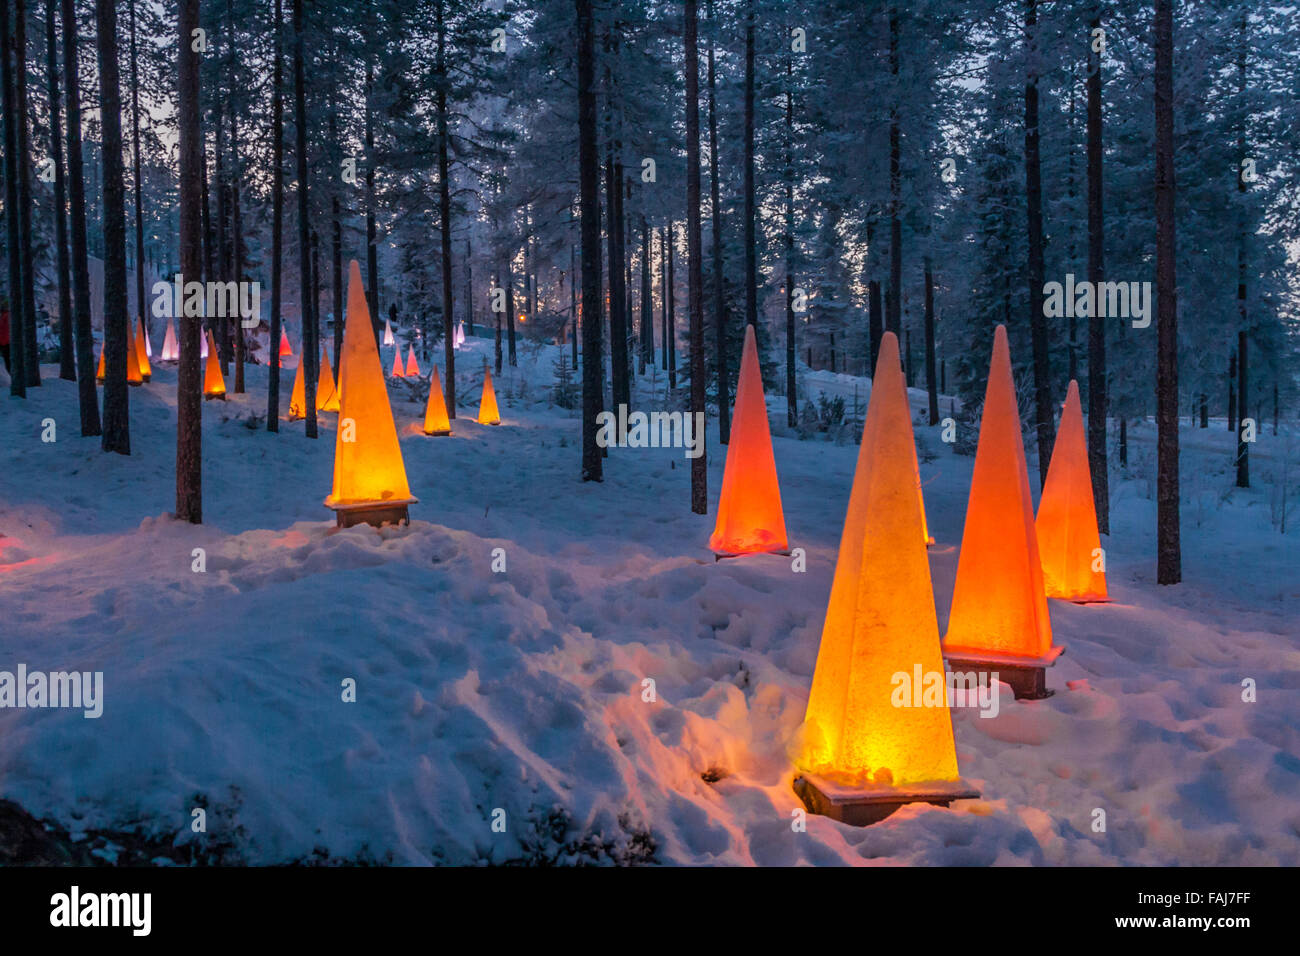 Forest near the Santa park: Winter scene with flashlights Stock Photo